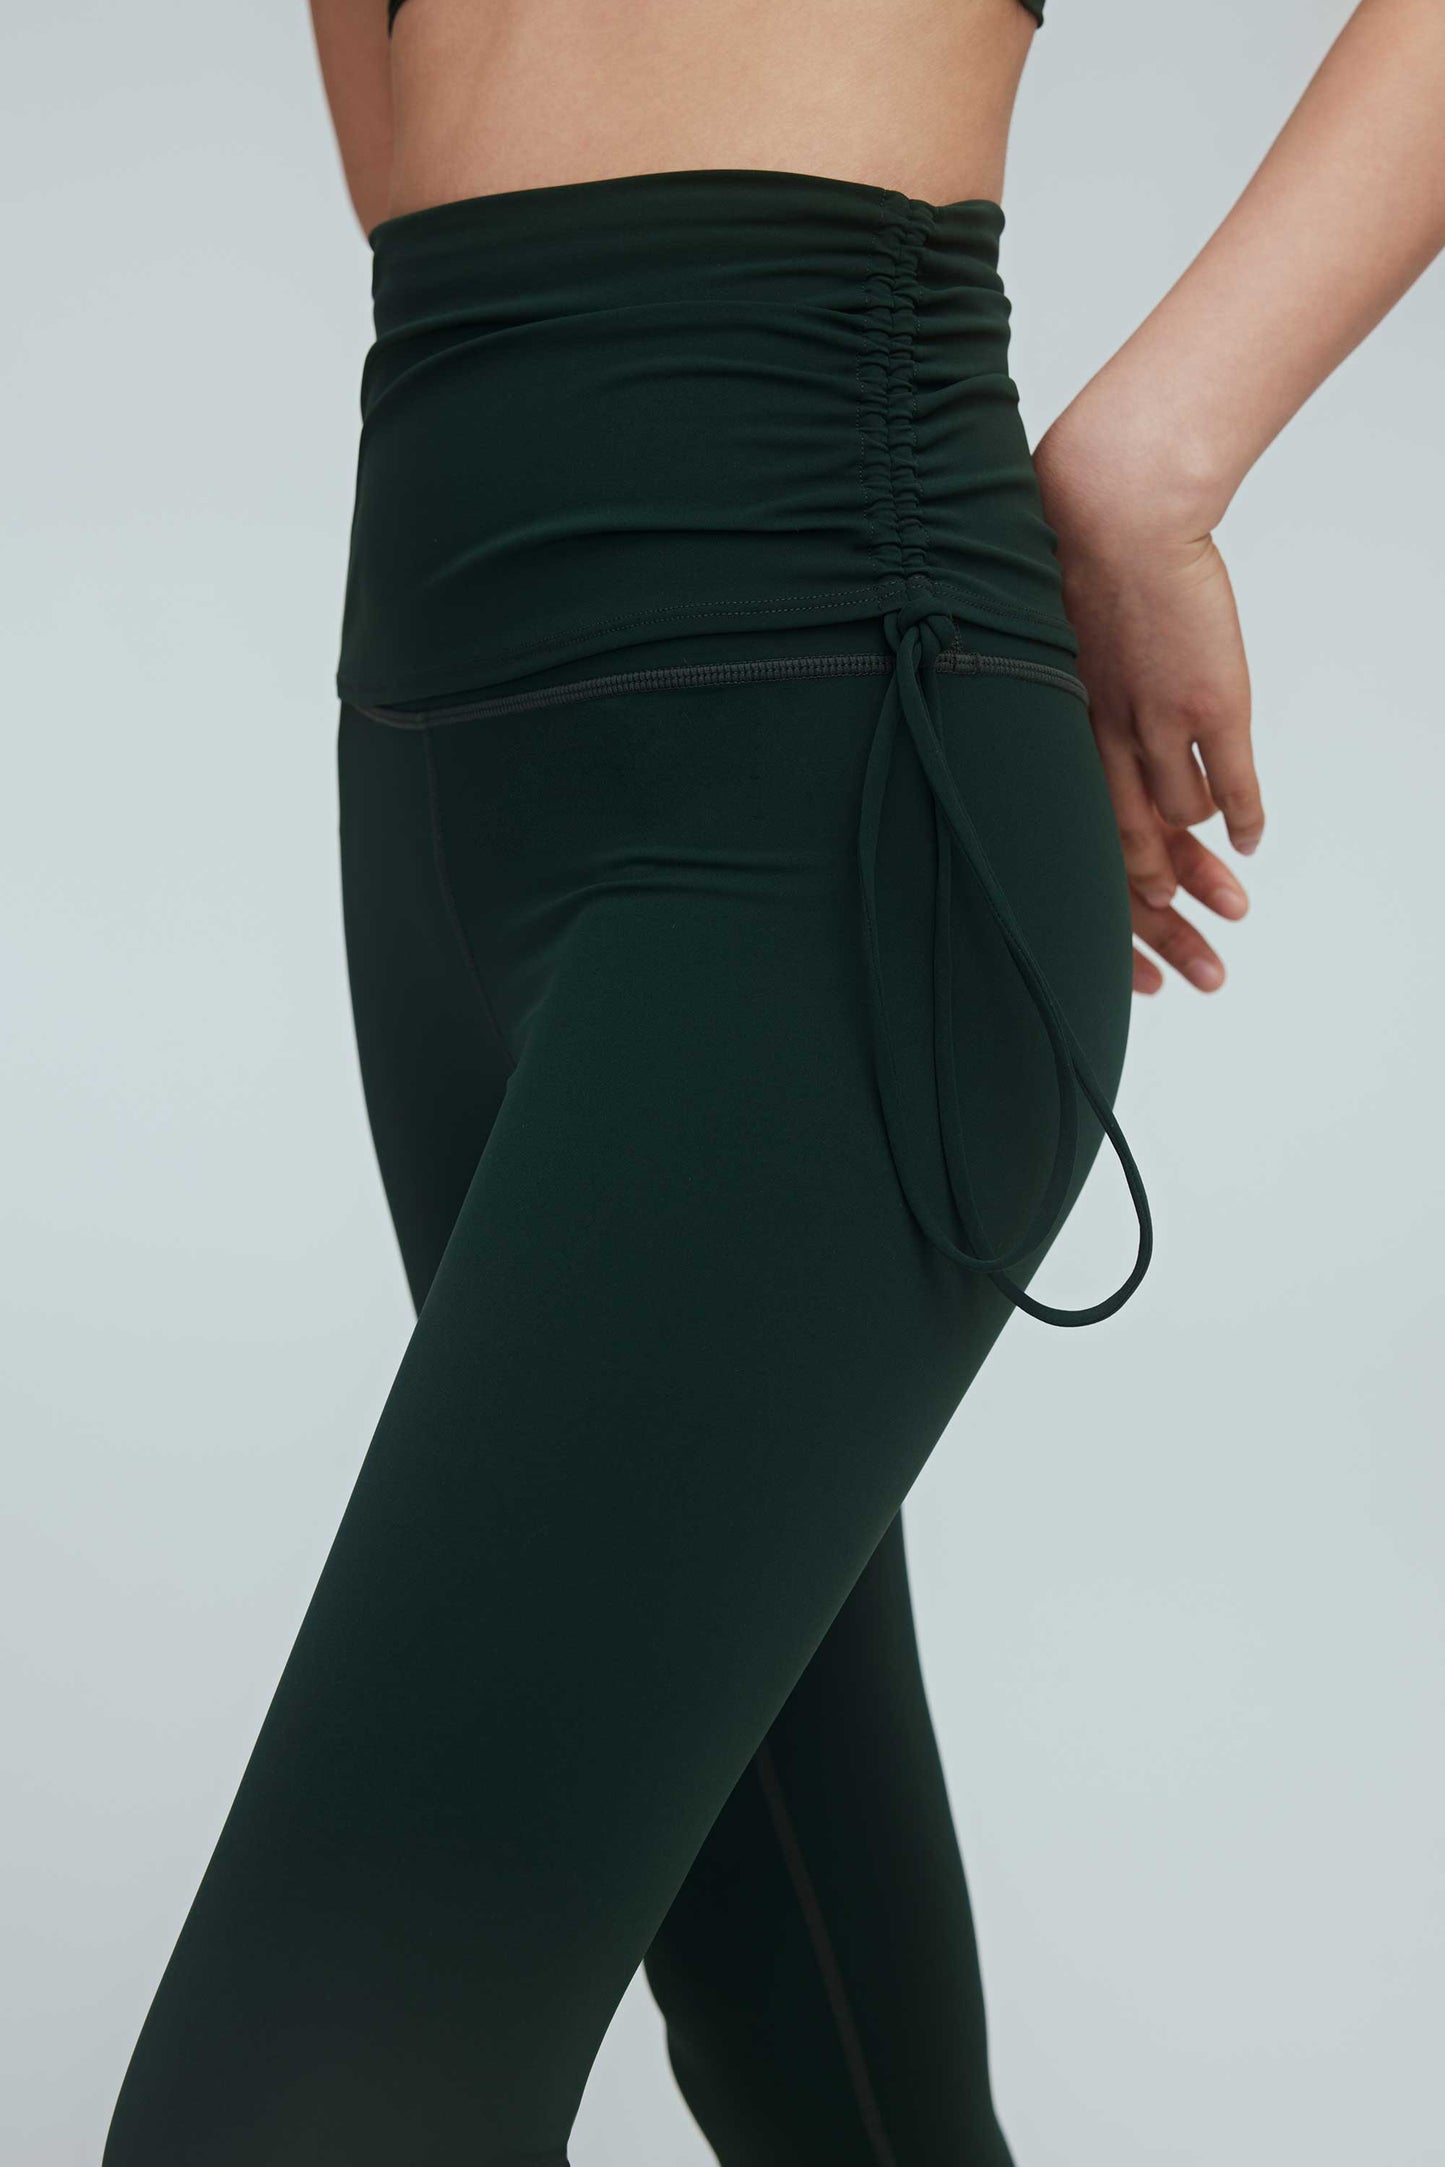 side of a woman wearing a green drawstring leggings